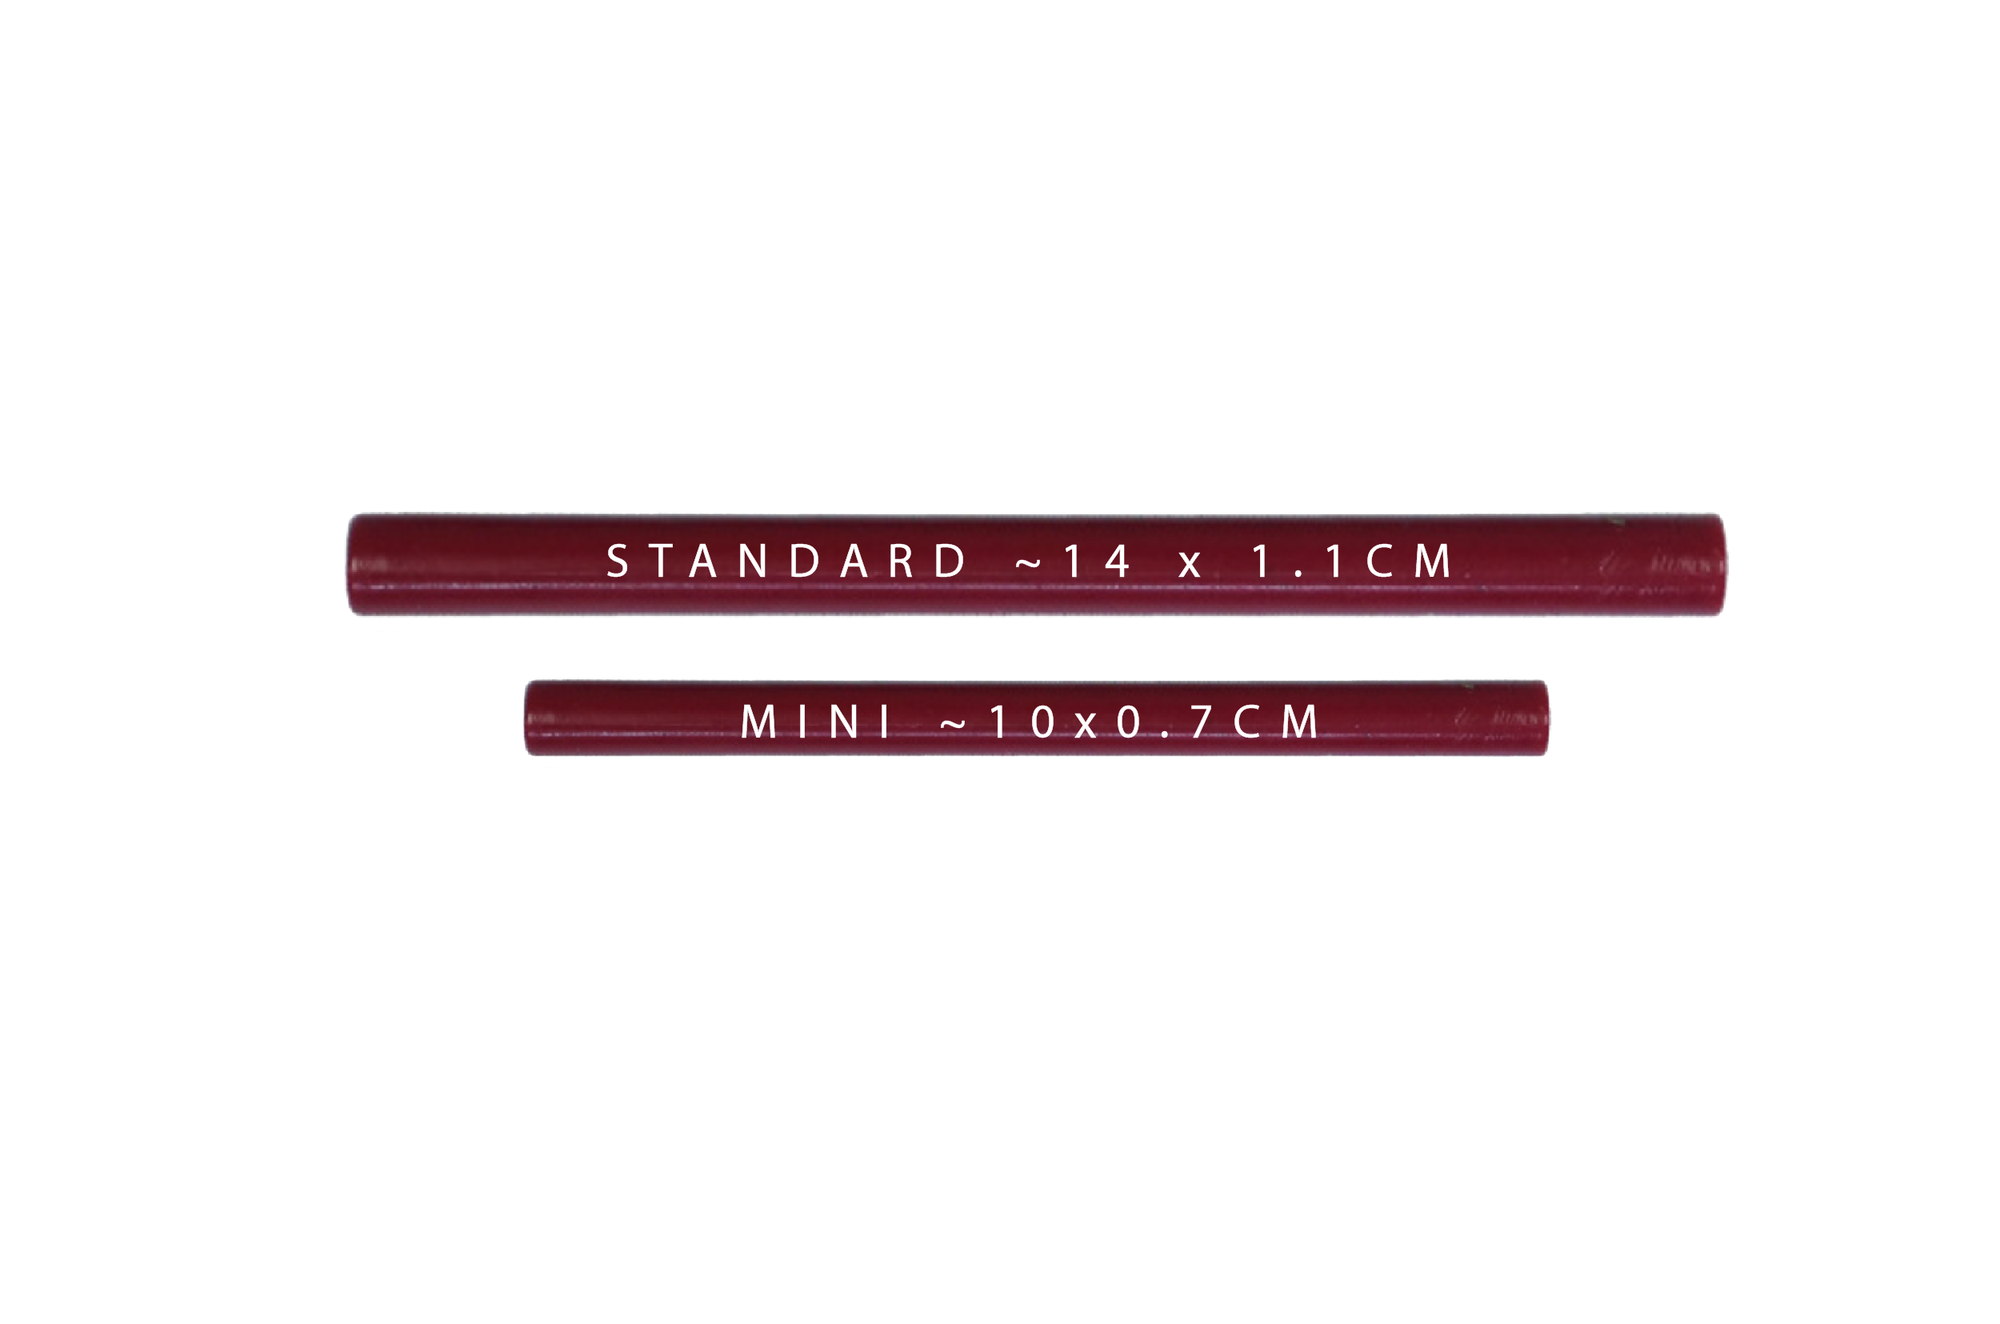 Standard Glue Gun Sealing Wax | Shades of Red - Backtozero B20 - Burgundy, Glue Gun, Metallic, Pink, Red, sale, Sealing Wax, Wax Stick